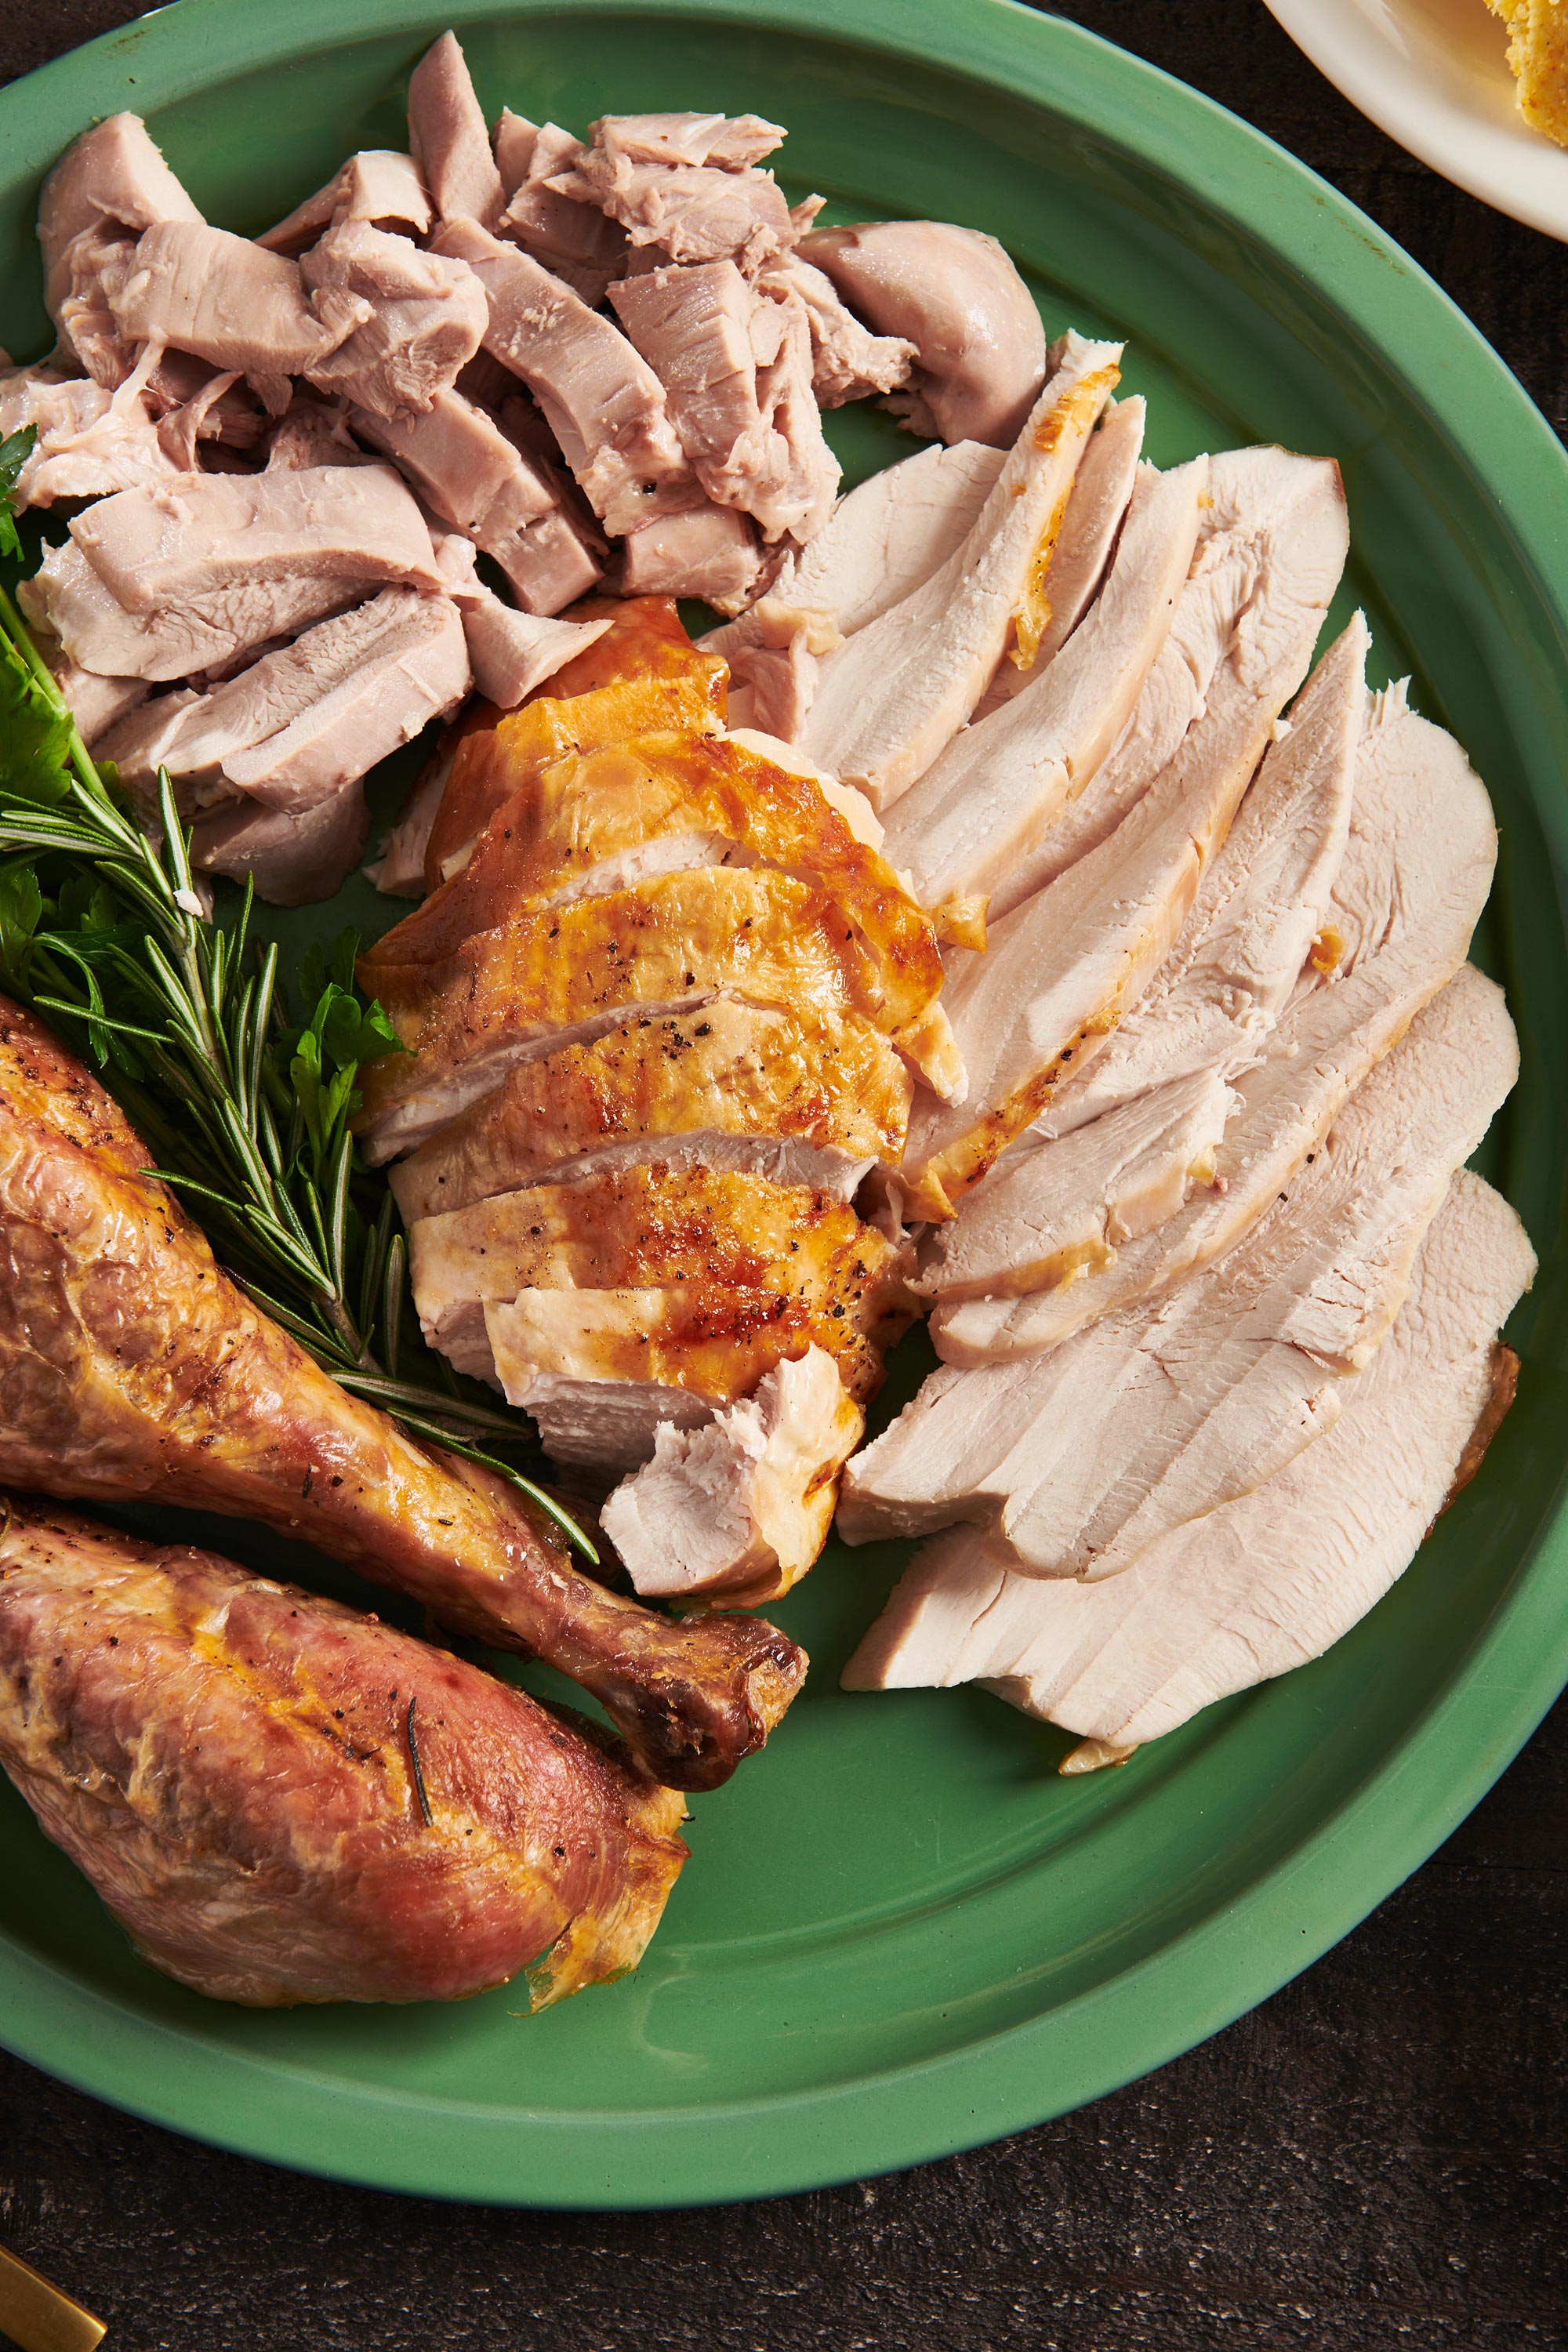 Sliced roasted turkey on serving platter.